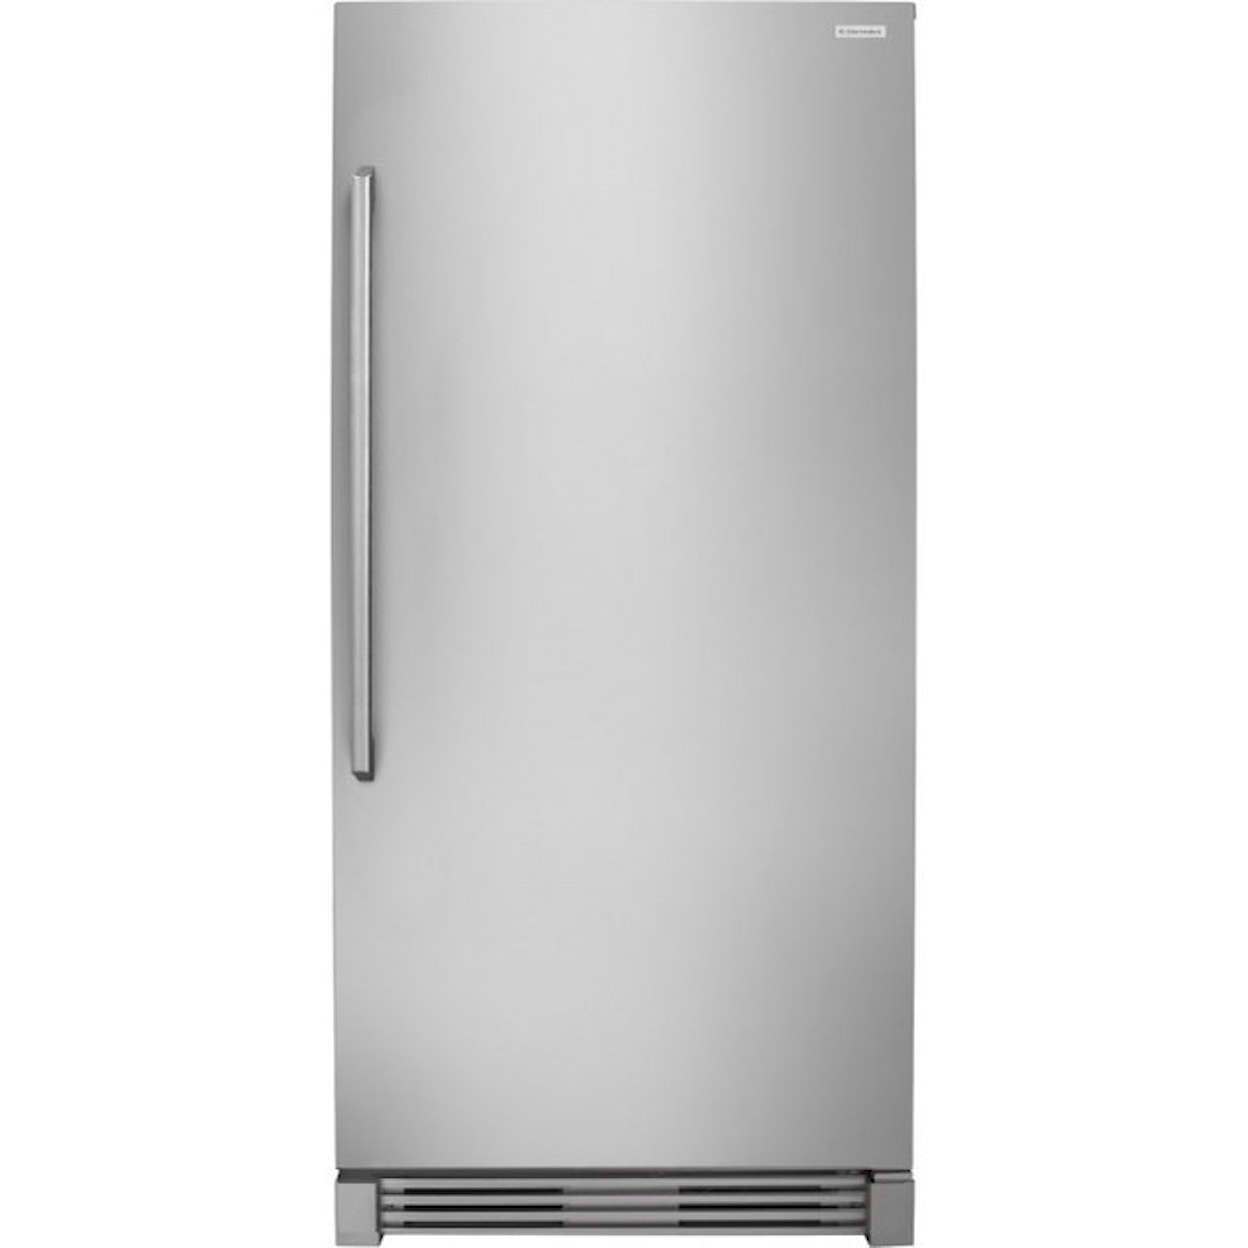 Electrolux Built-In Refrigerators - Electrolux 18.6 Cu. Ft. Built-In All Refrigerator